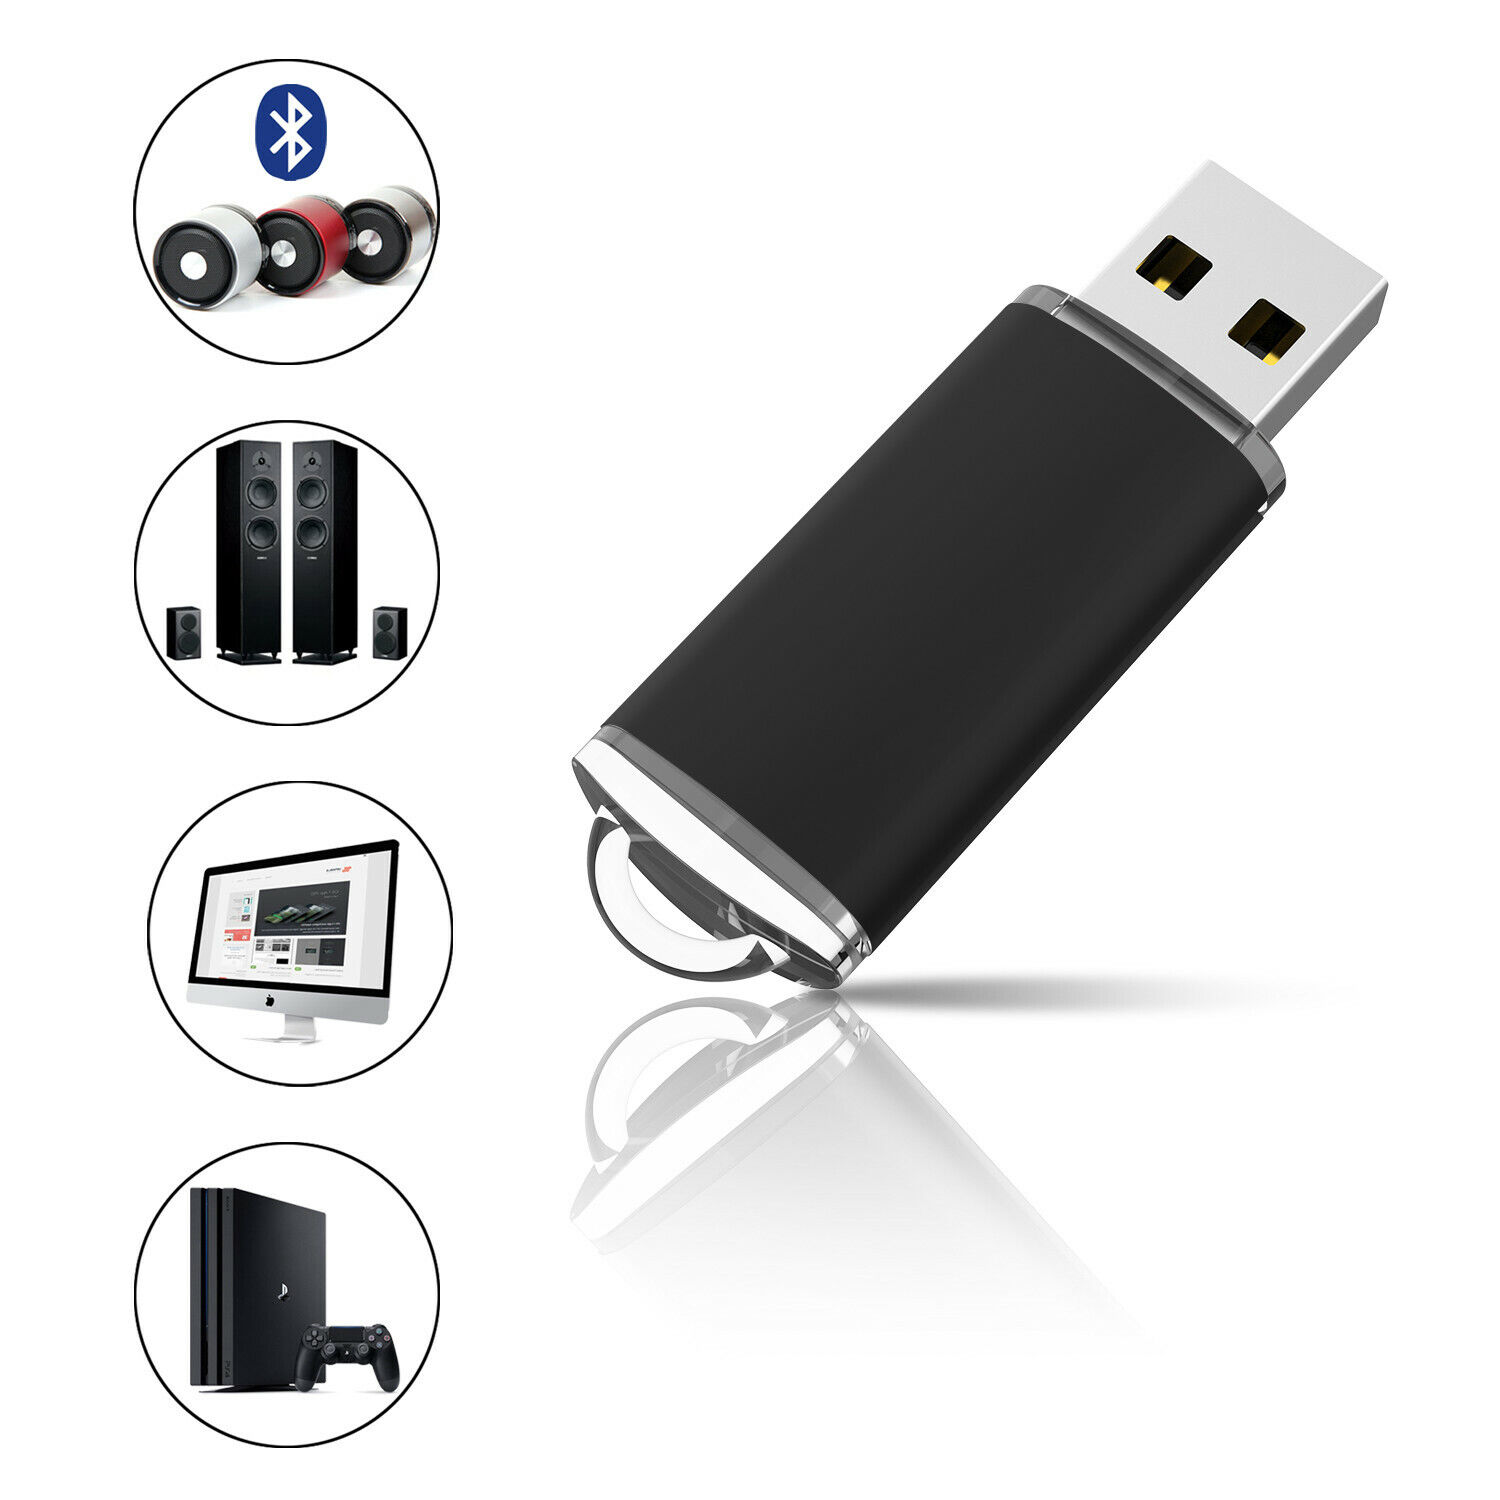 10Pack 16GB USB 2.0 USB Flash Drive High Speed Thumb Drives Memory Stick Storage Kootion Does not apply - фотография #10